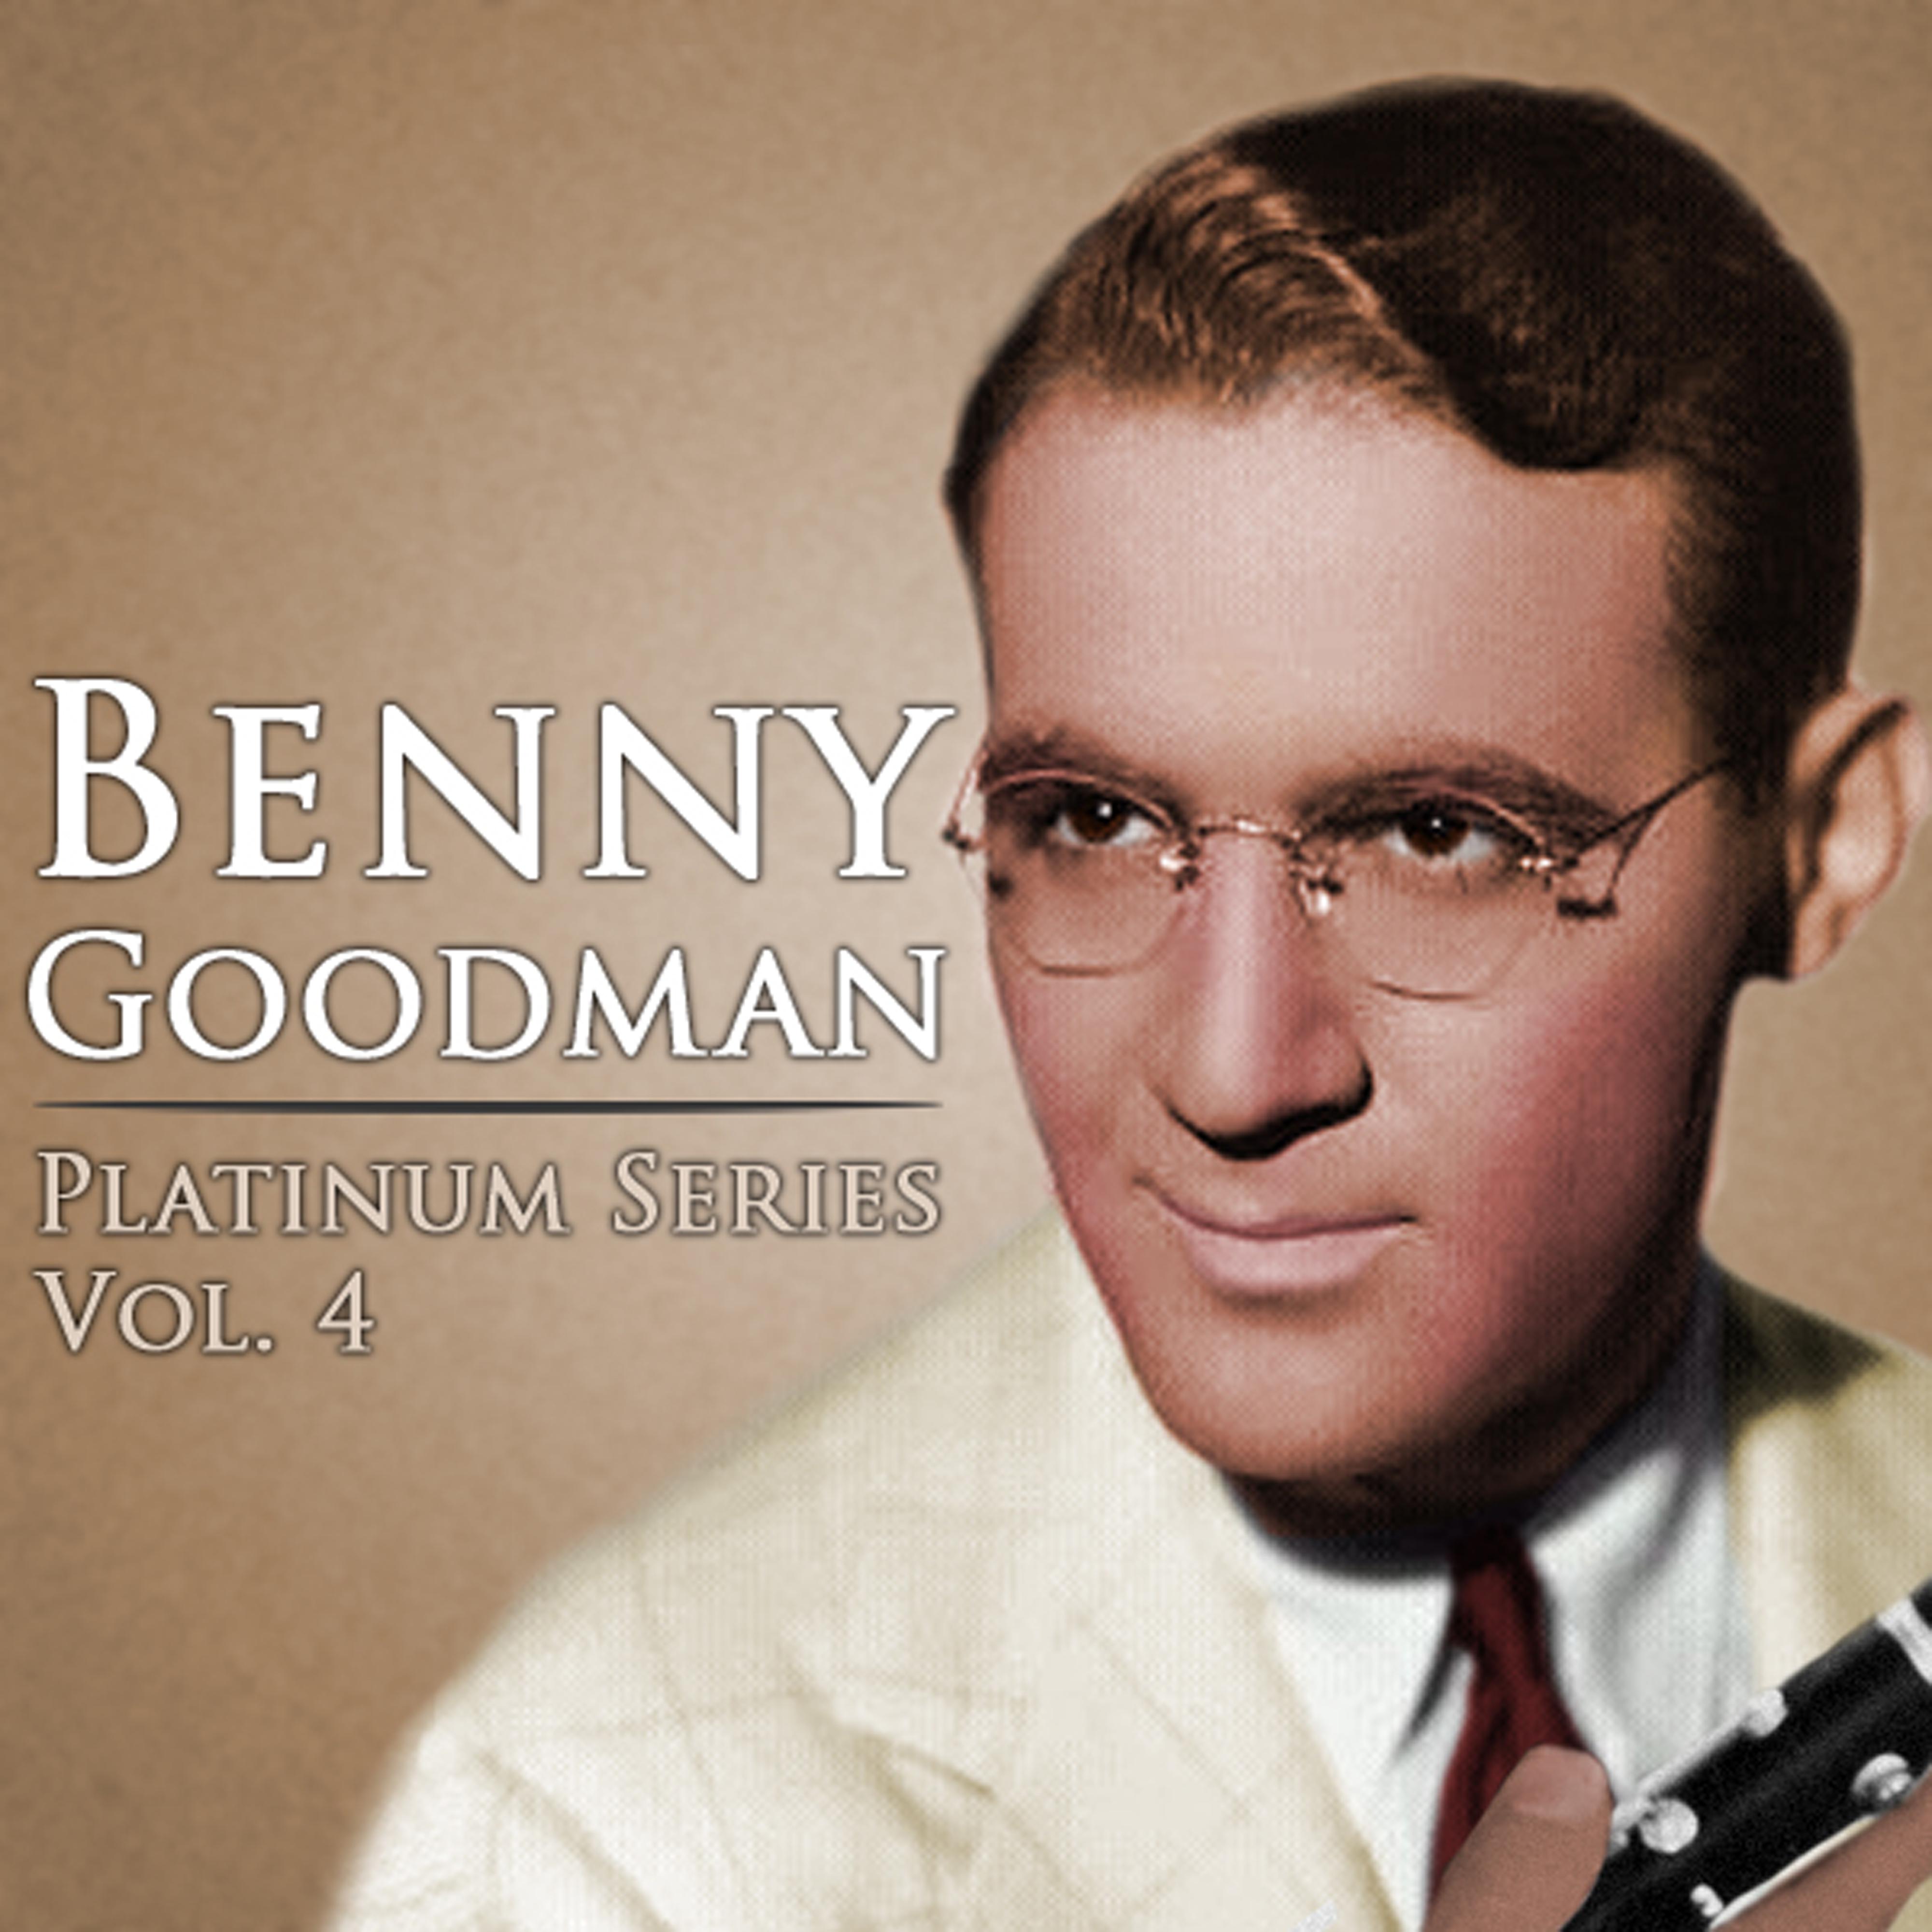 Benny Goodman - Platinum Series, Vol. 4 (Remastered)